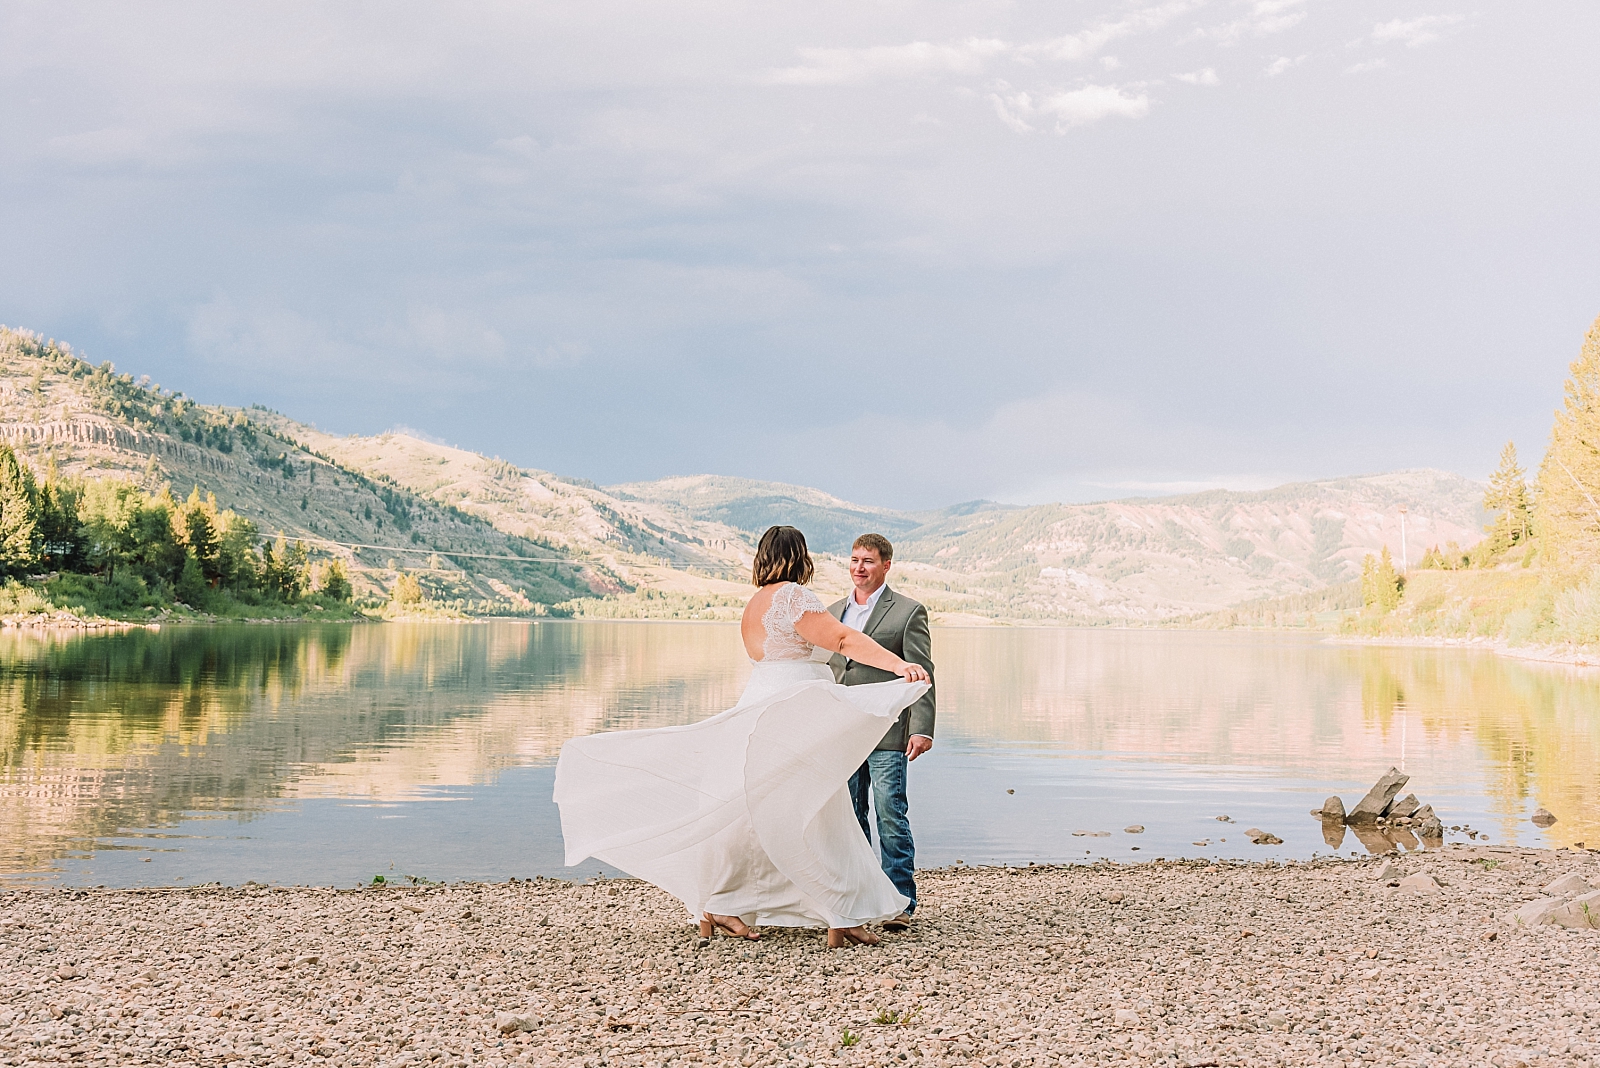 married couple dances along the lake shore in jackson hole wyoming wedding